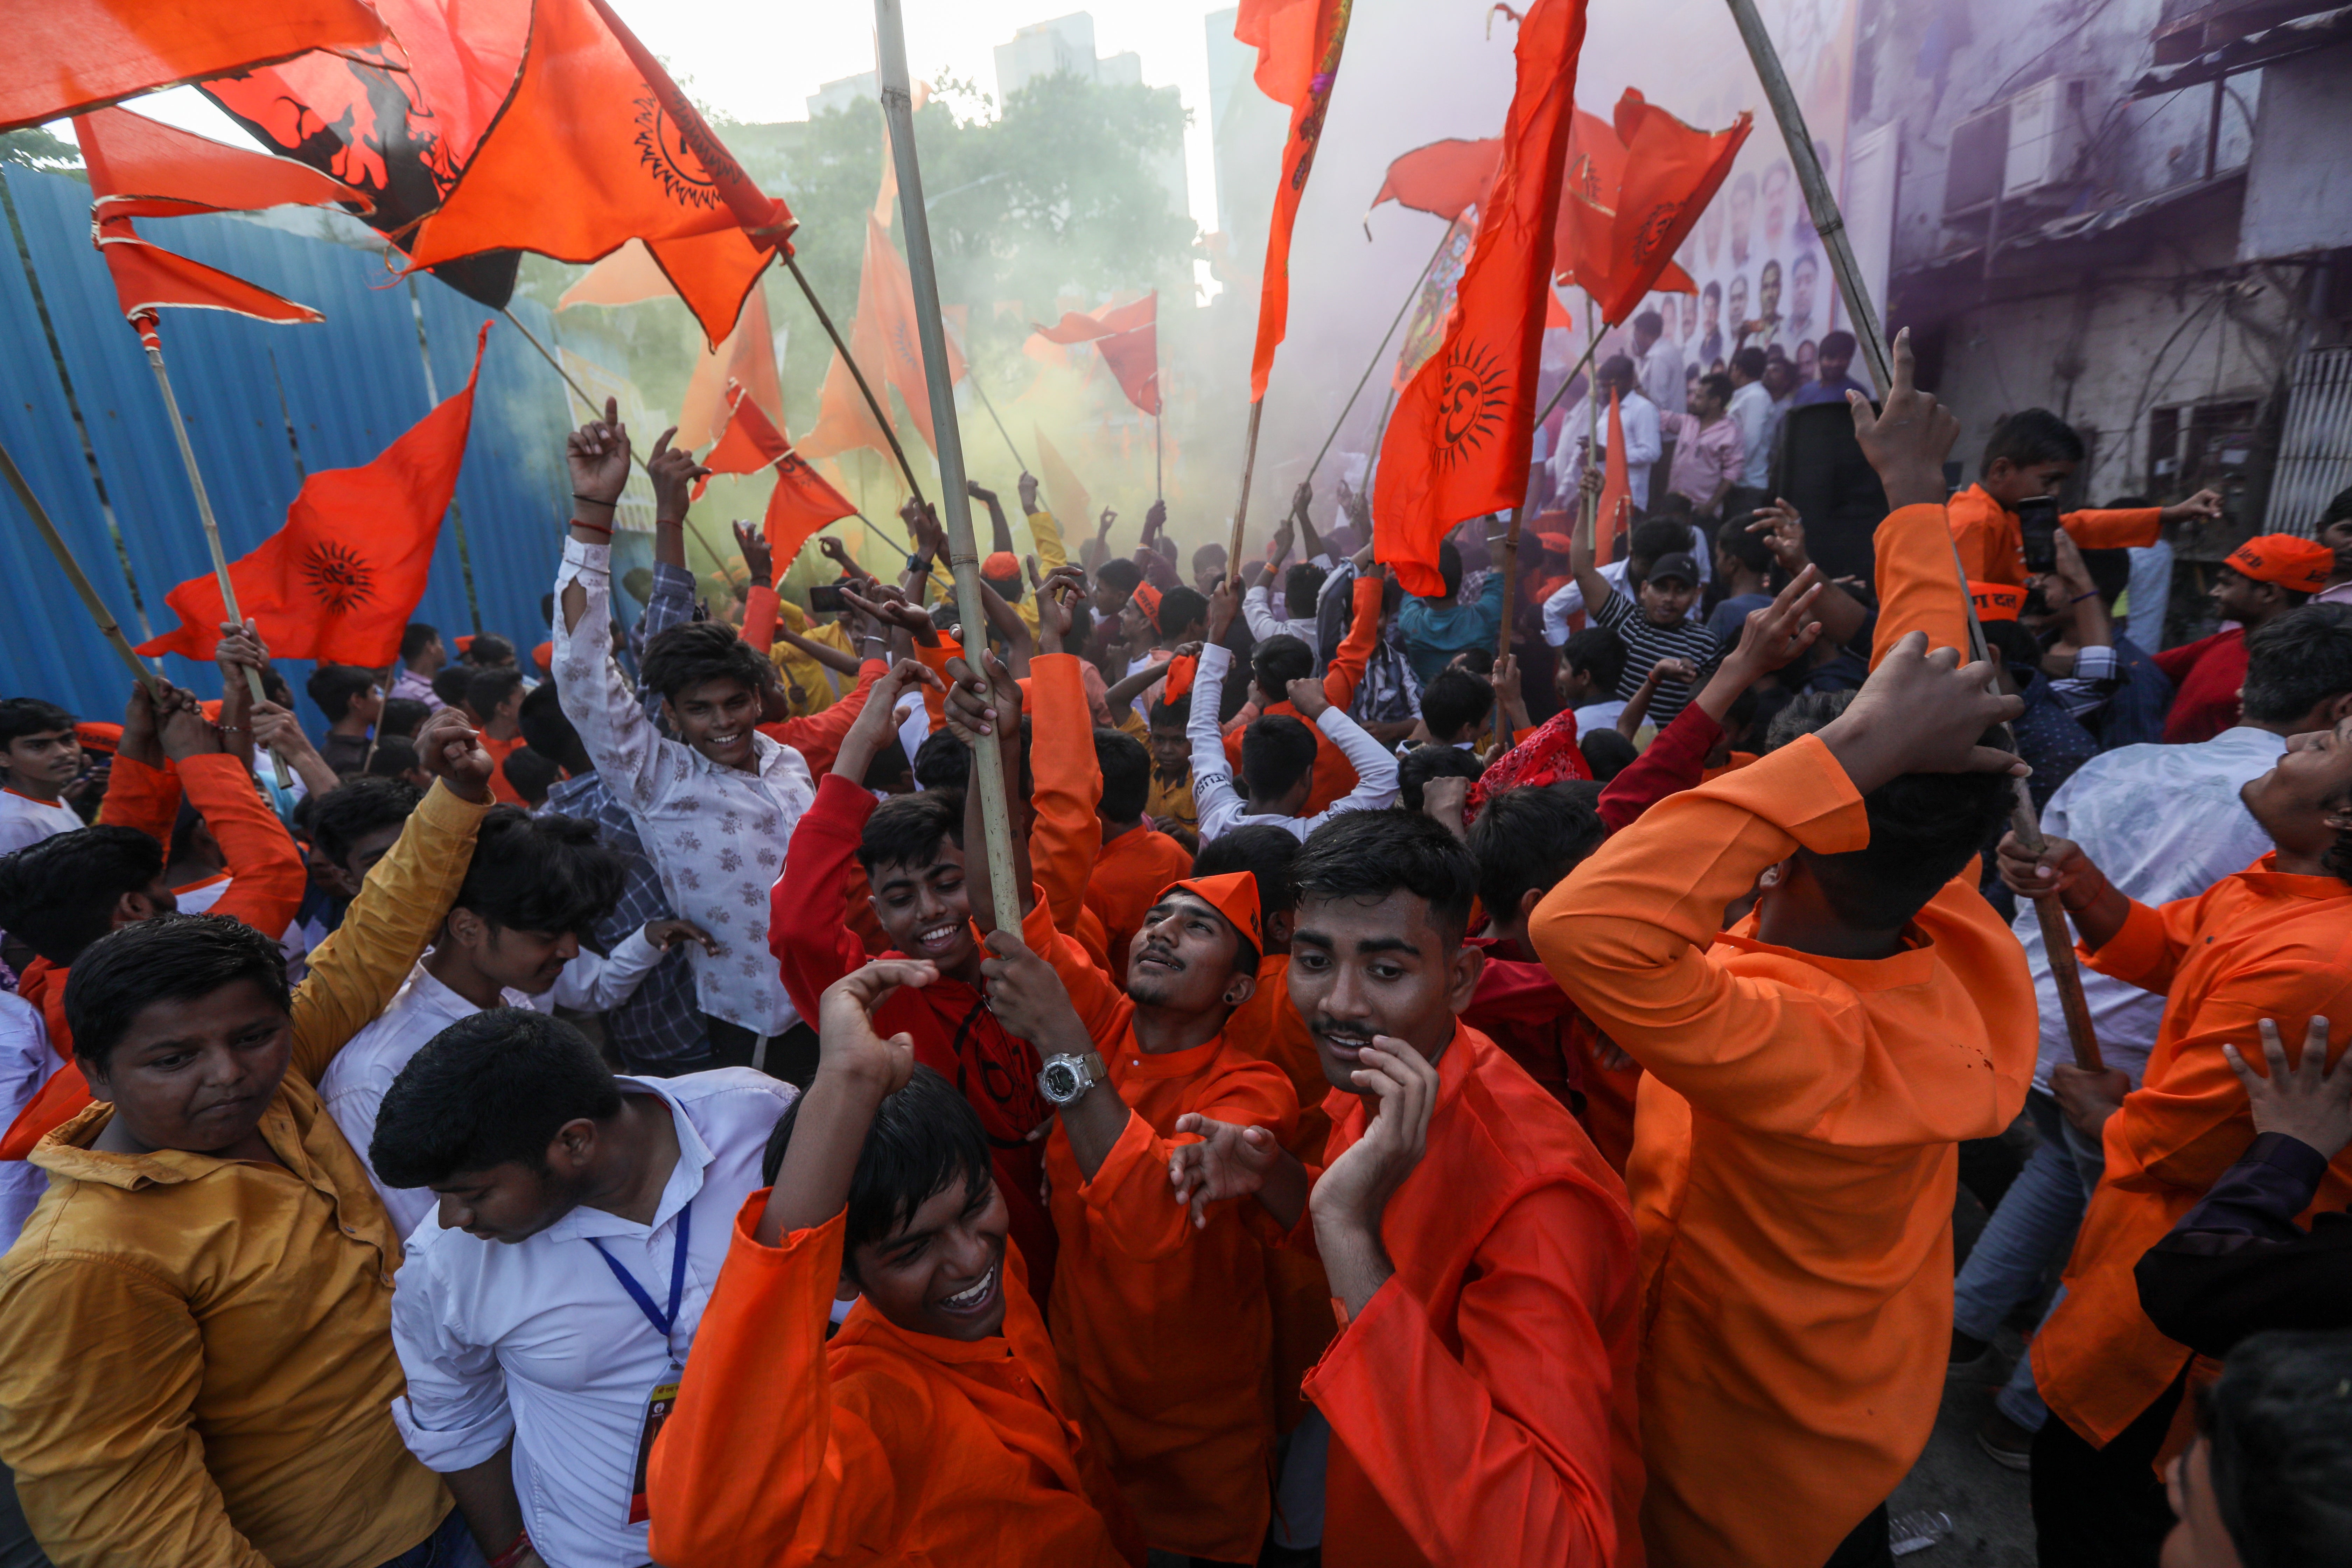 Hindu devotees participate in a religious procession to celebrate the Ram Navami festival in Mumbai